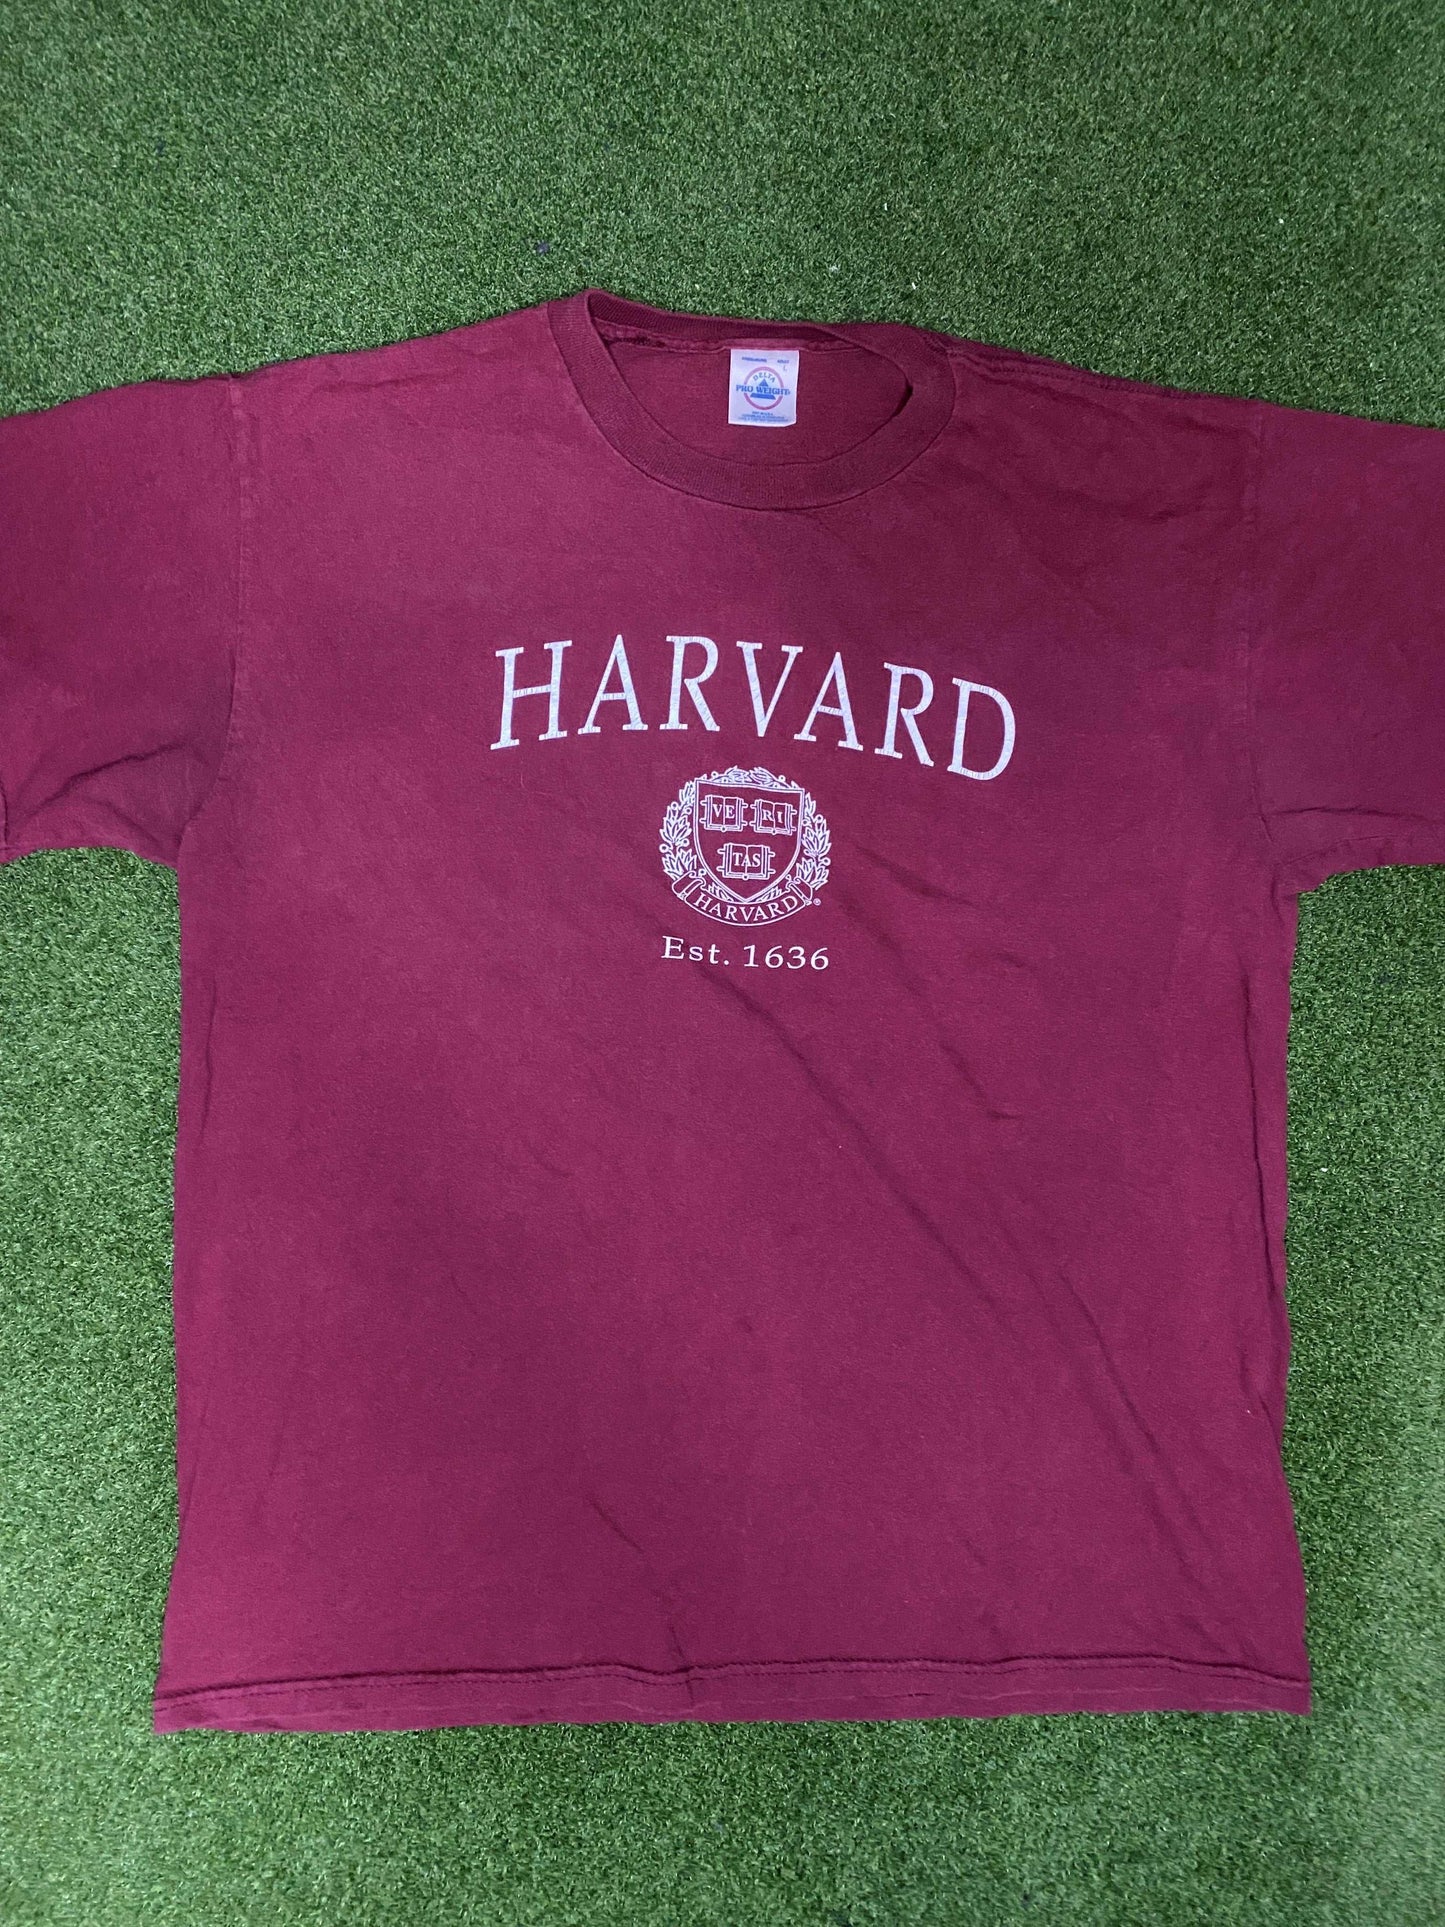 90s Harvard Crimson - Vintage Ivey League Tee Shirt (Large)